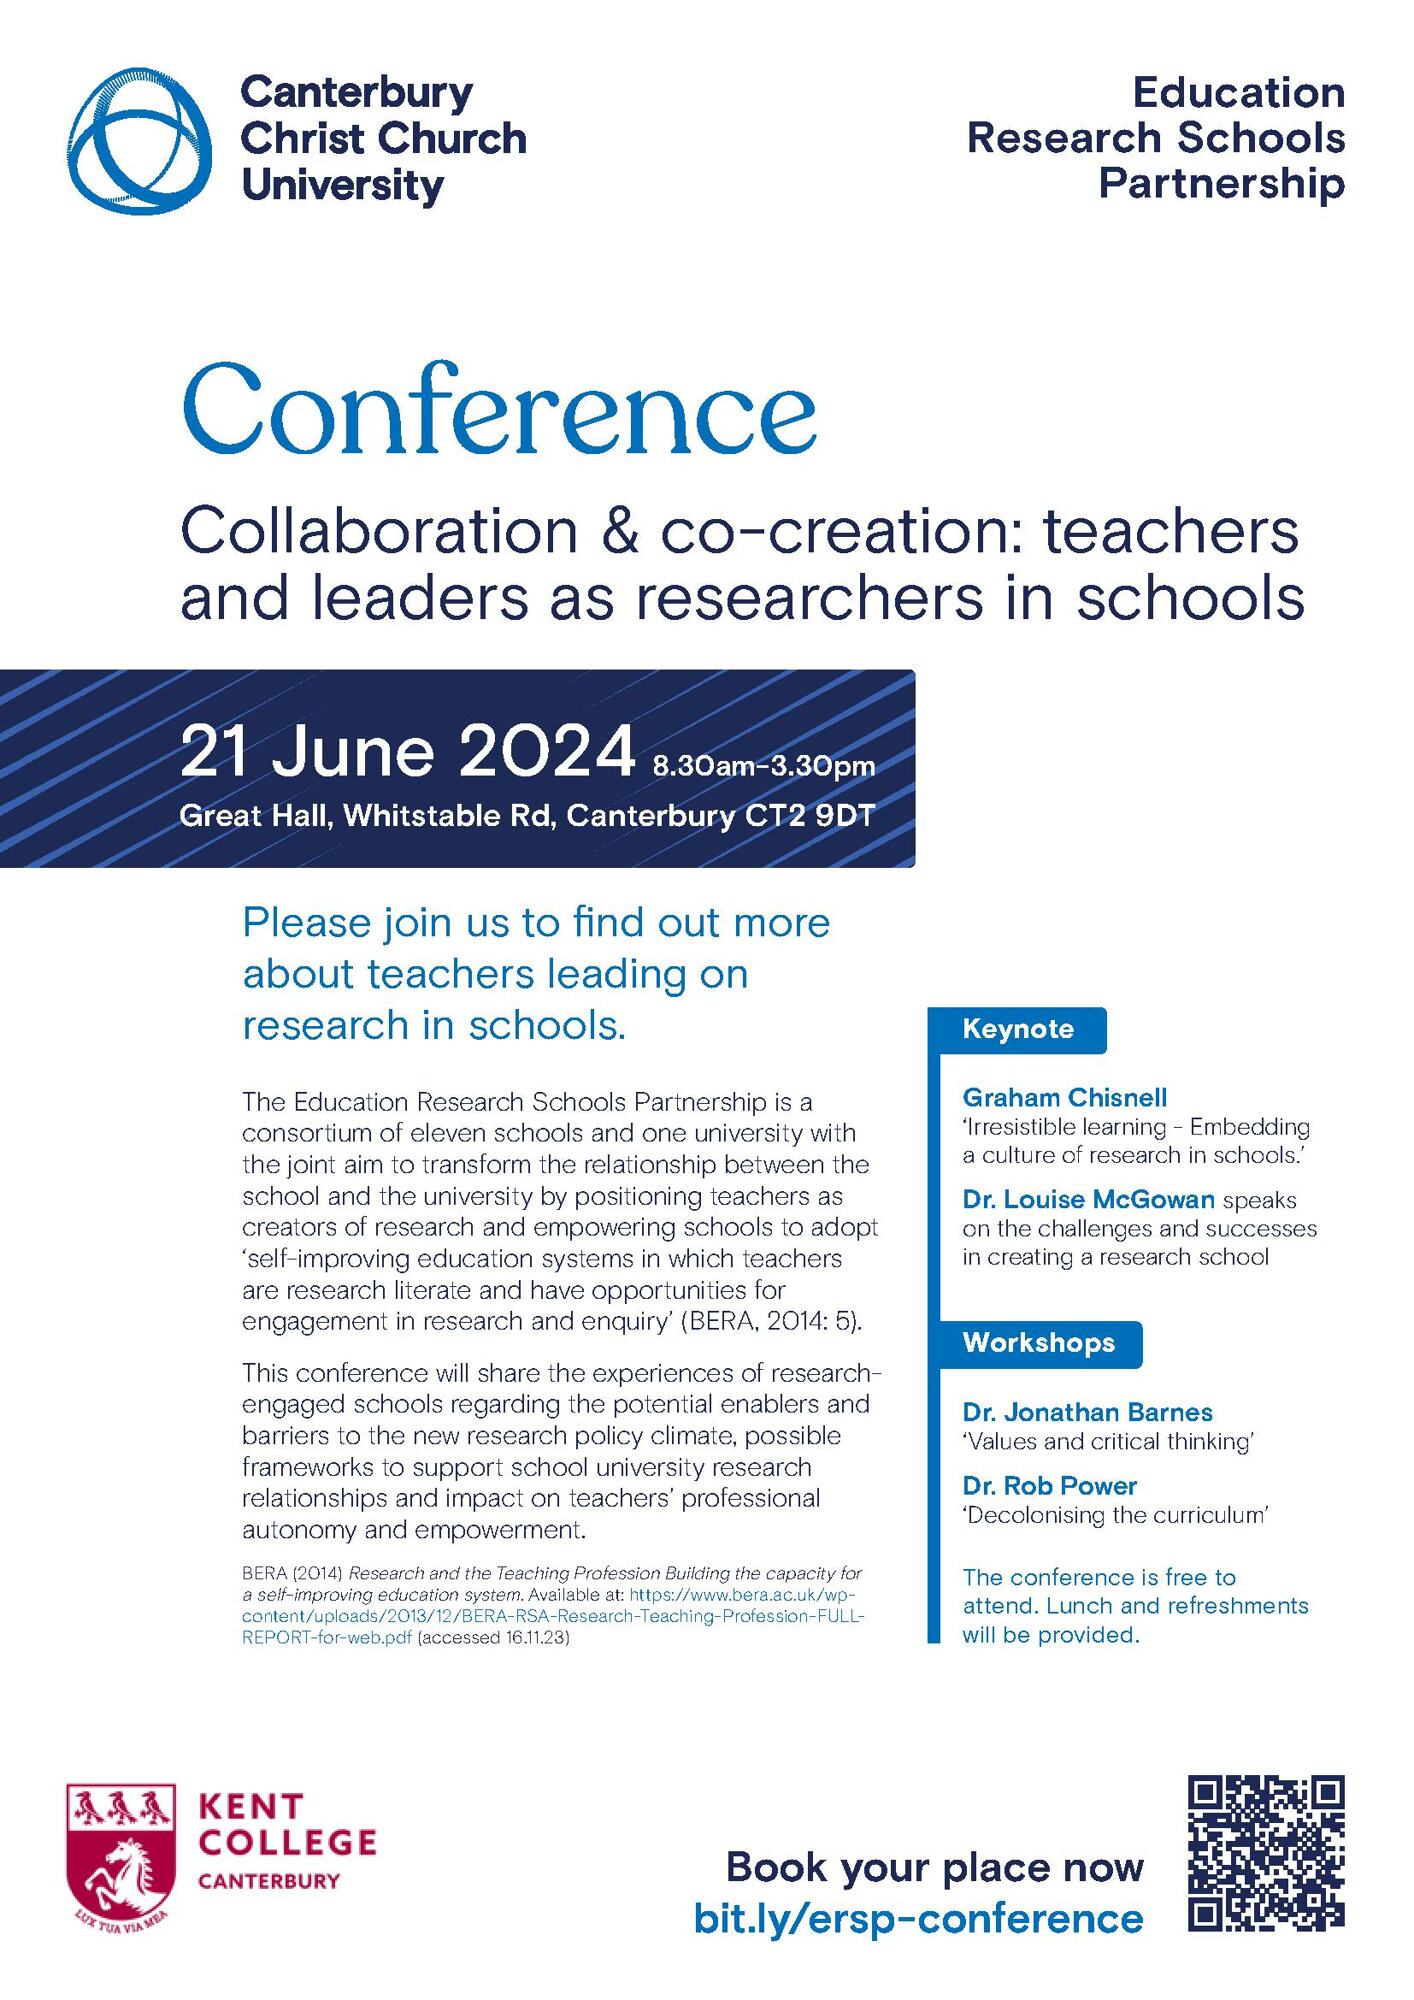 Canterbury Christ Church University Research Schools Partnership Conference Flyer June 2024 57370877 1